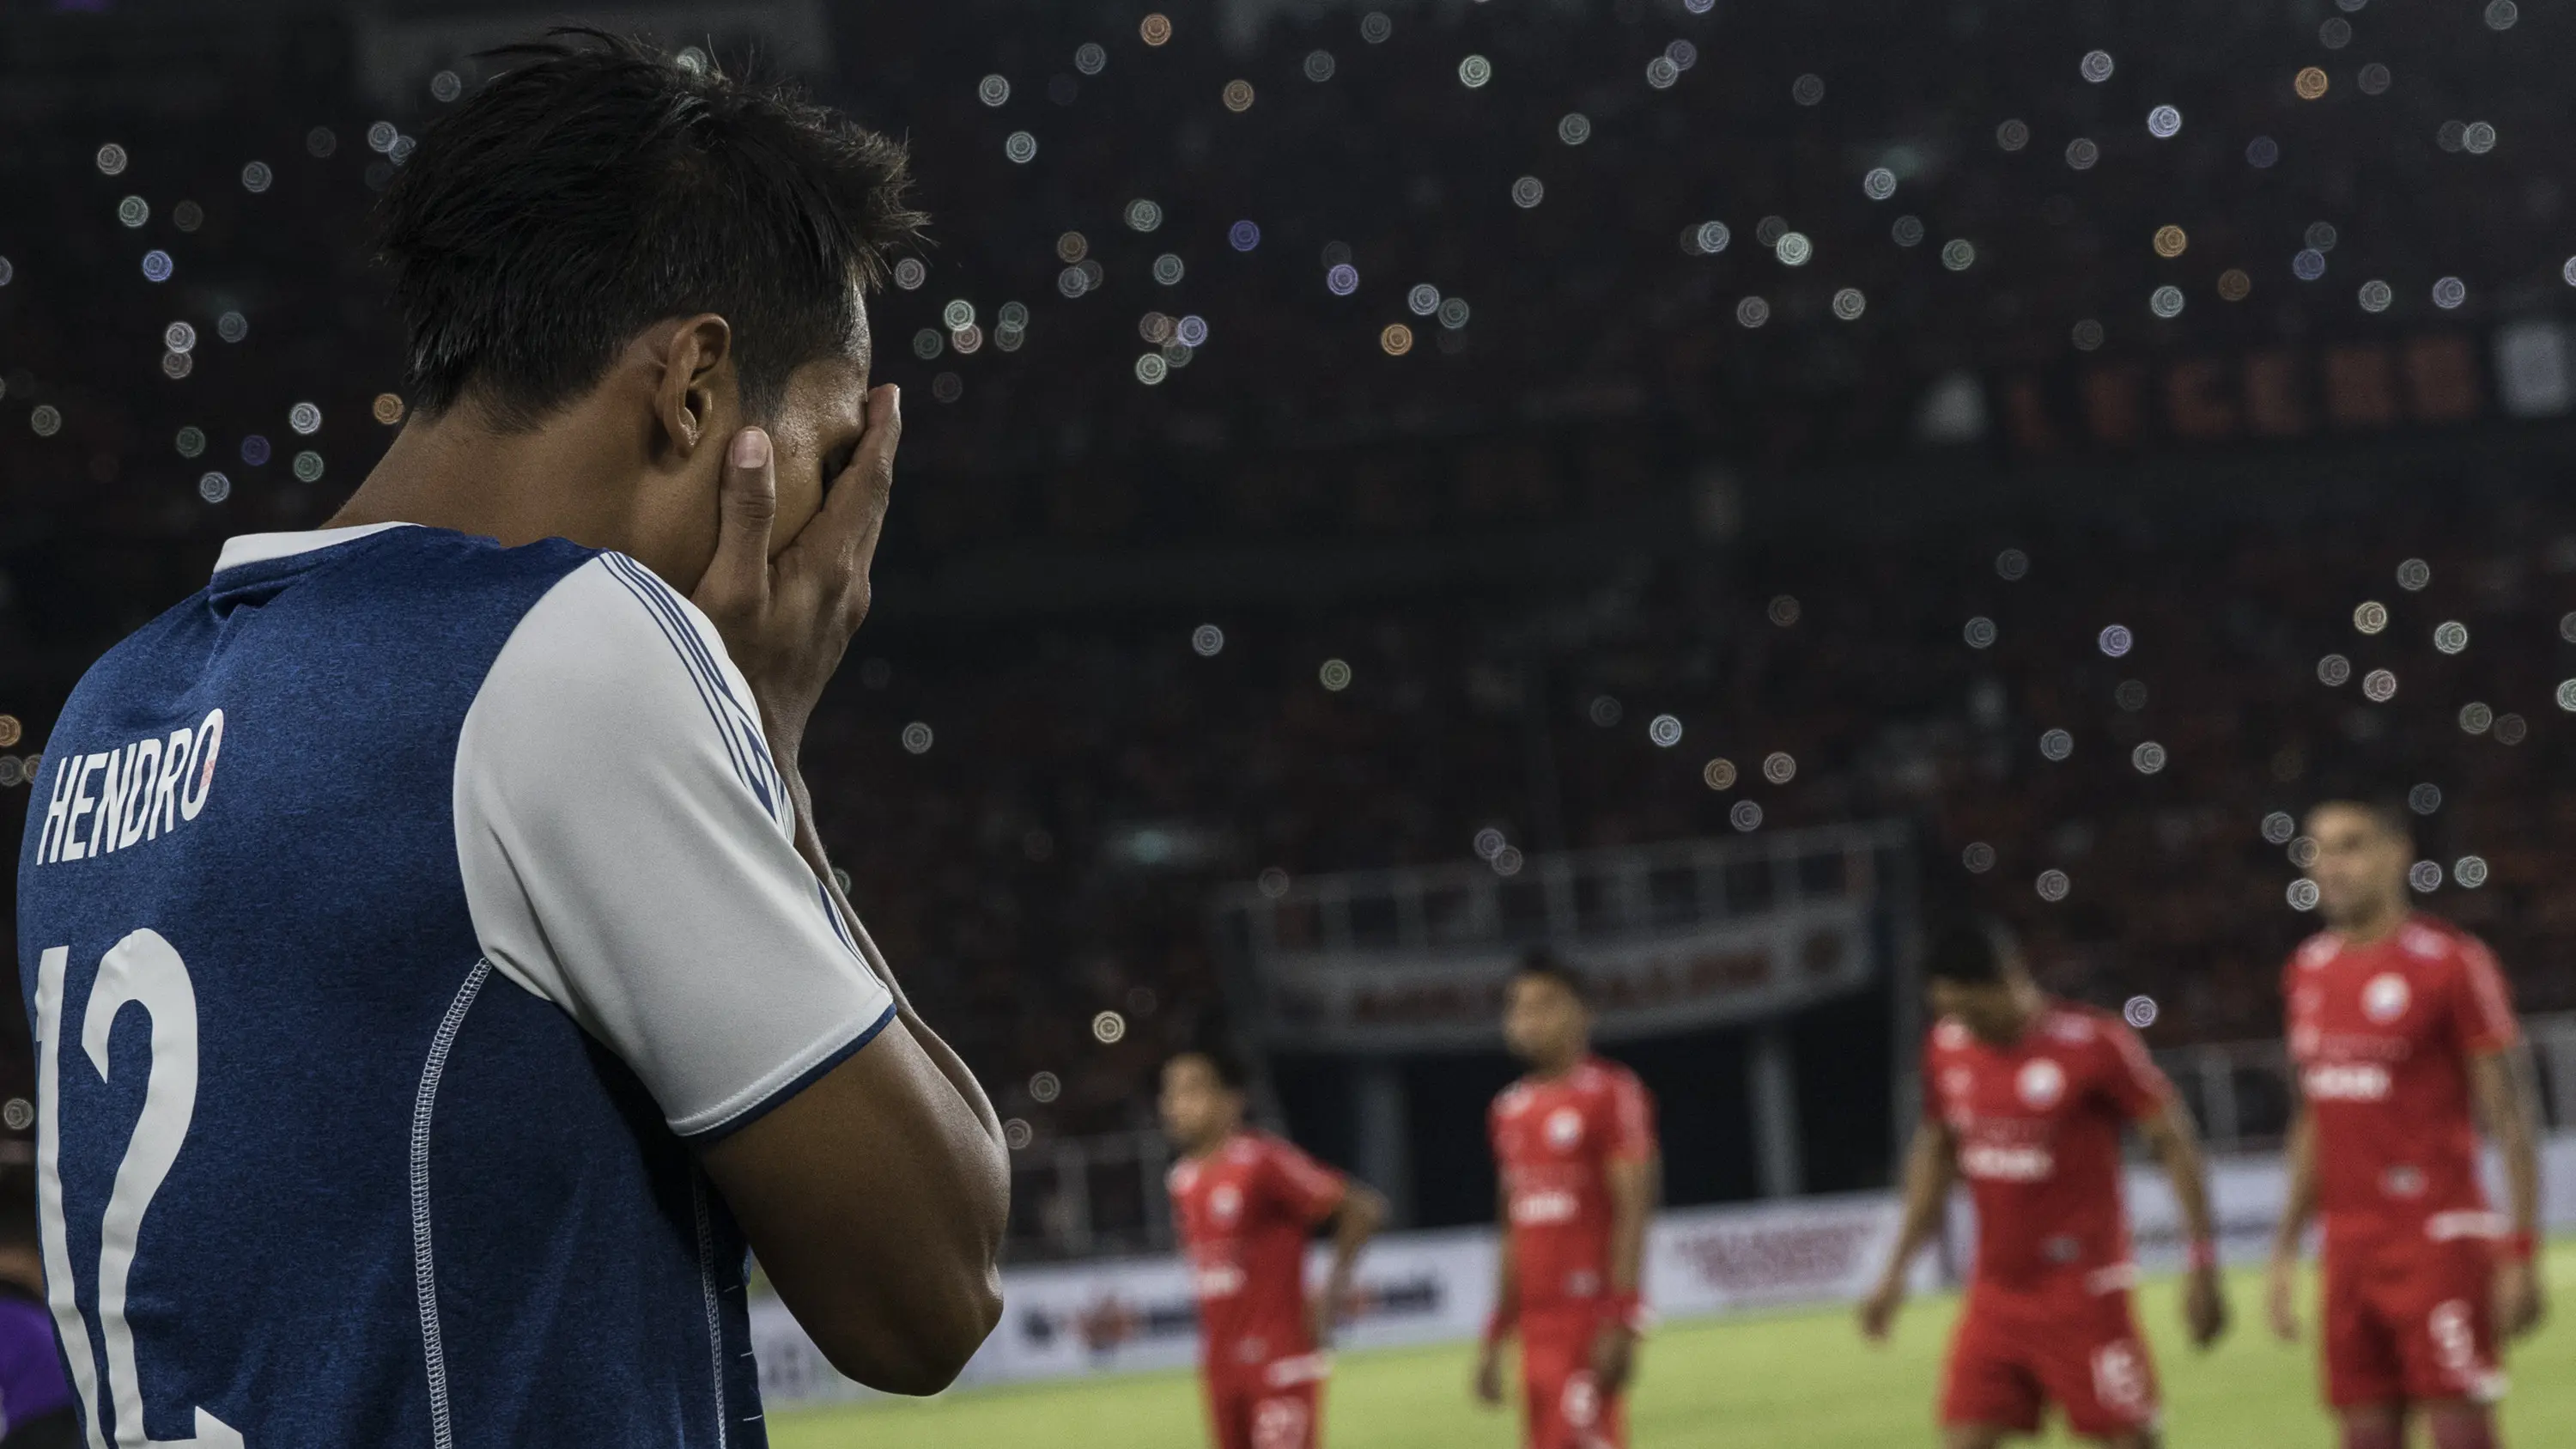 Bek Arema FC, Hendro Siswanto, berdoa sebelum melawan Persija Jakarta pada laga Liga 1 di SUGBK, Jakarta, Sabtu (31/3/2018). Persija menang 3-1 atas Arema FC. (Bola.com/Vitalis Yogi Trisna)